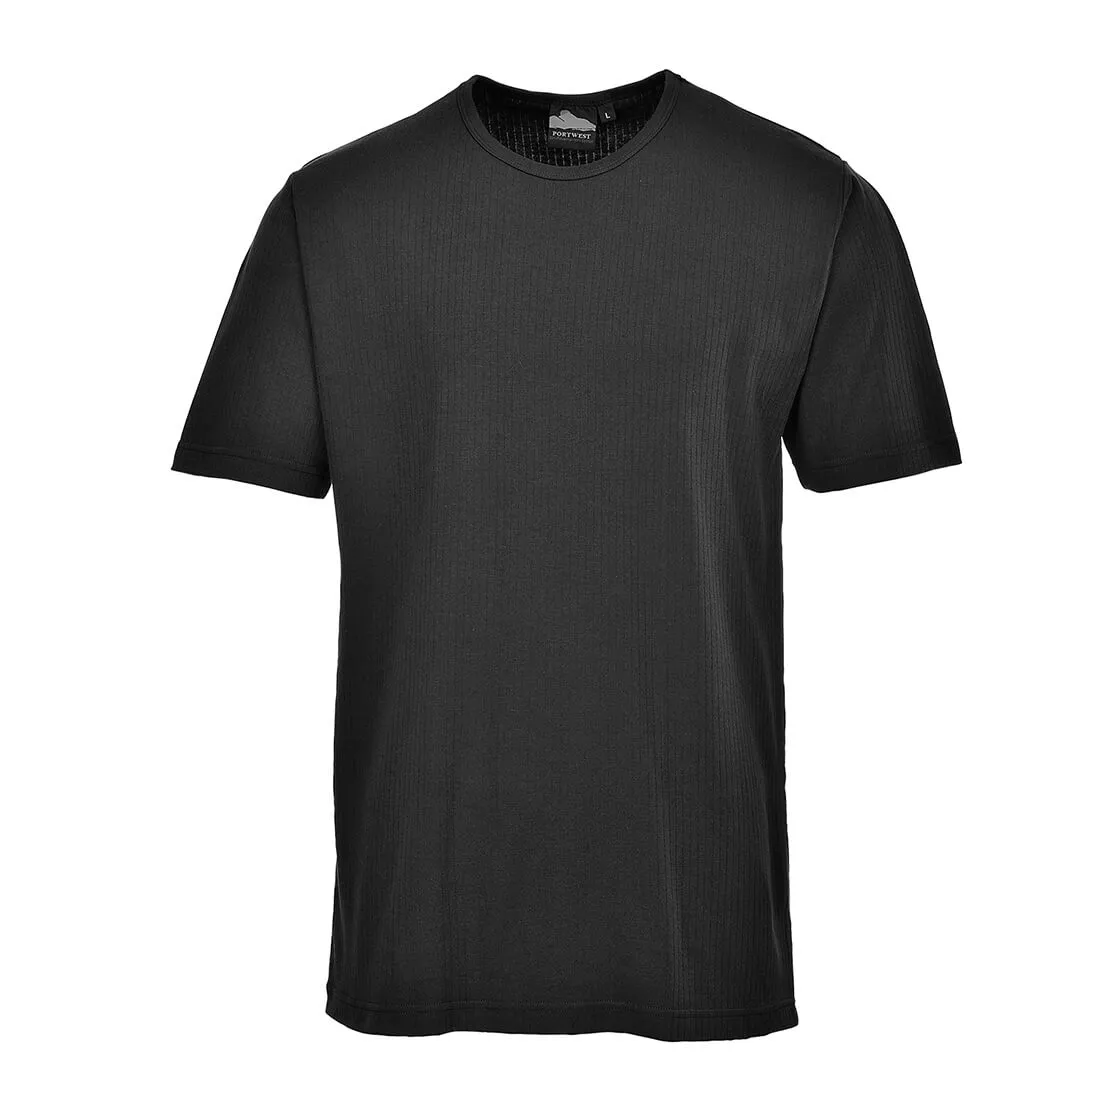 Portwest Thermal Short Sleeve T Shirt - Black, 3XL